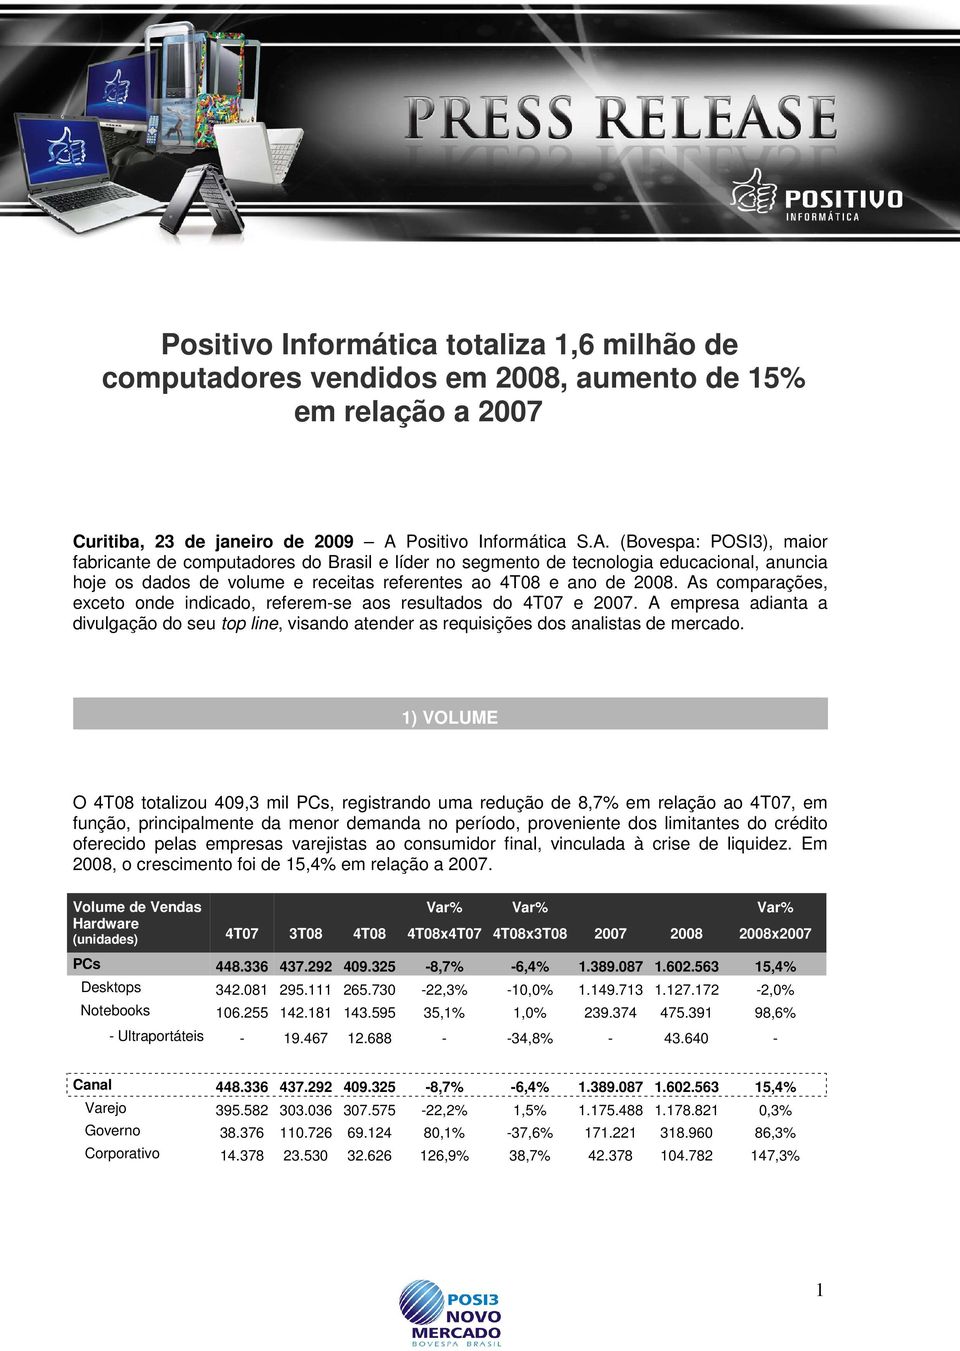 (Bovespa: POSI3), maior fabricante de computadores do Brasil e líder no segmento de tecnologia educacional, anuncia hoje os dados de volume e receitas referentes ao e ano de 2008.